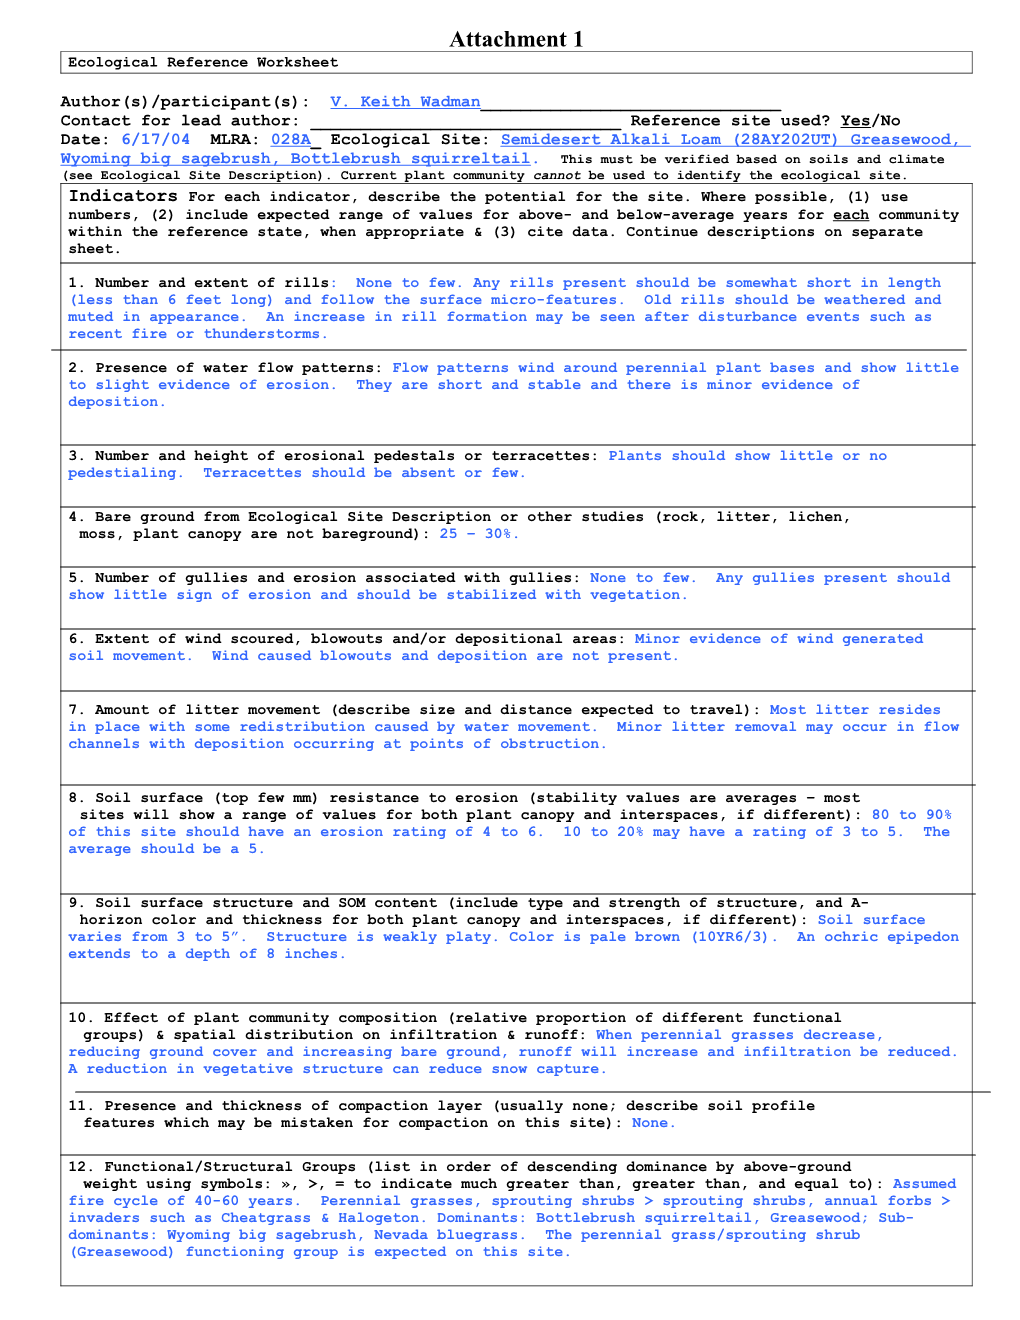 Ecological Reference Worksheet s1